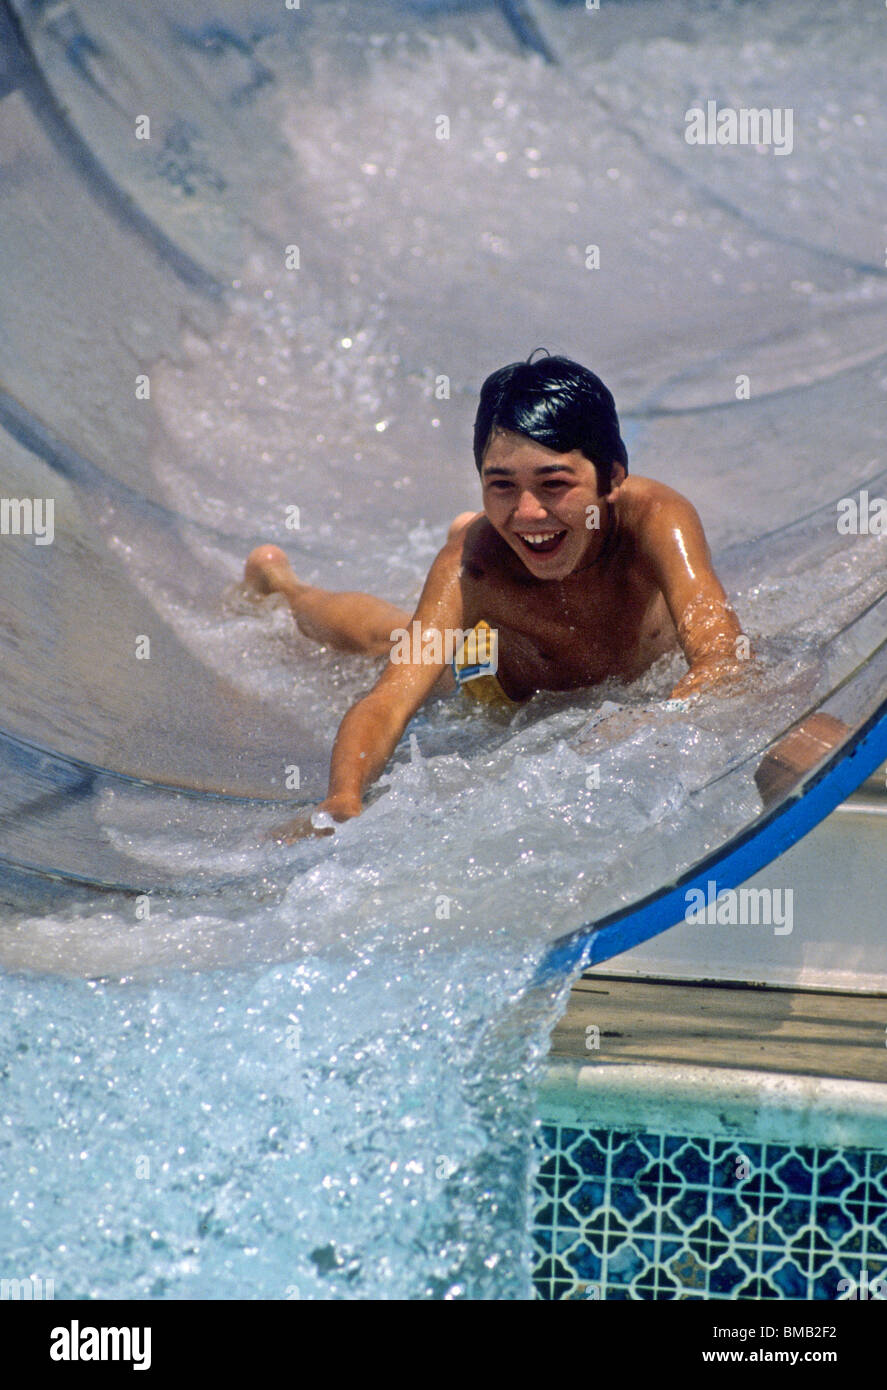 Boy swim water slide fun laugh thrill sport recreation wet pool tube happy  kid speedo swim suit tan sun Stock Photo - Alamy